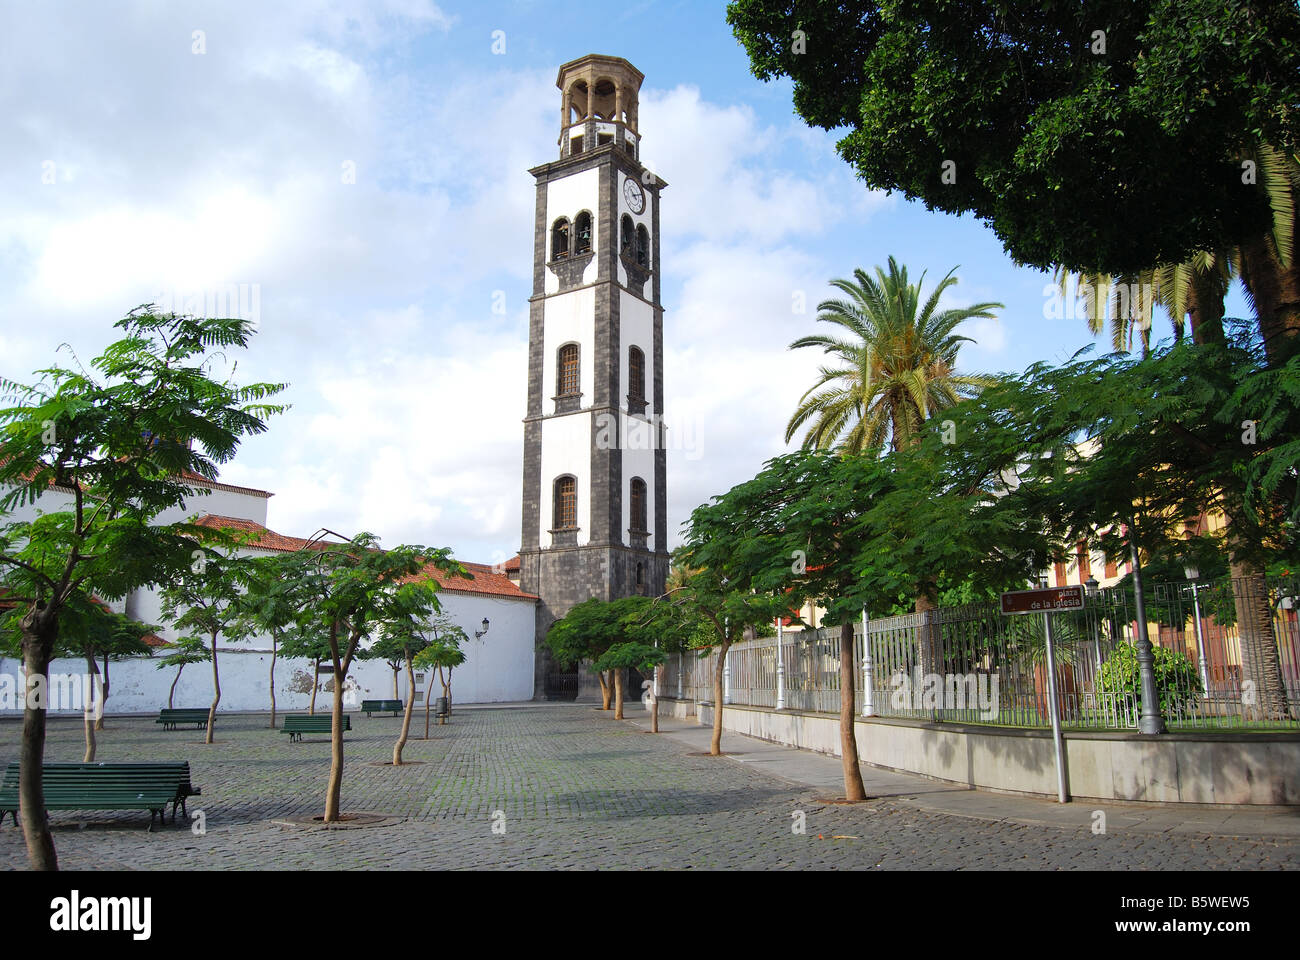 Iglesia de Nuestra Senora de la Conception, Plaza de La Iglesia, Santa Cruz de Tenerife, Tenerife, Canary Islands, Spain Stock Photo